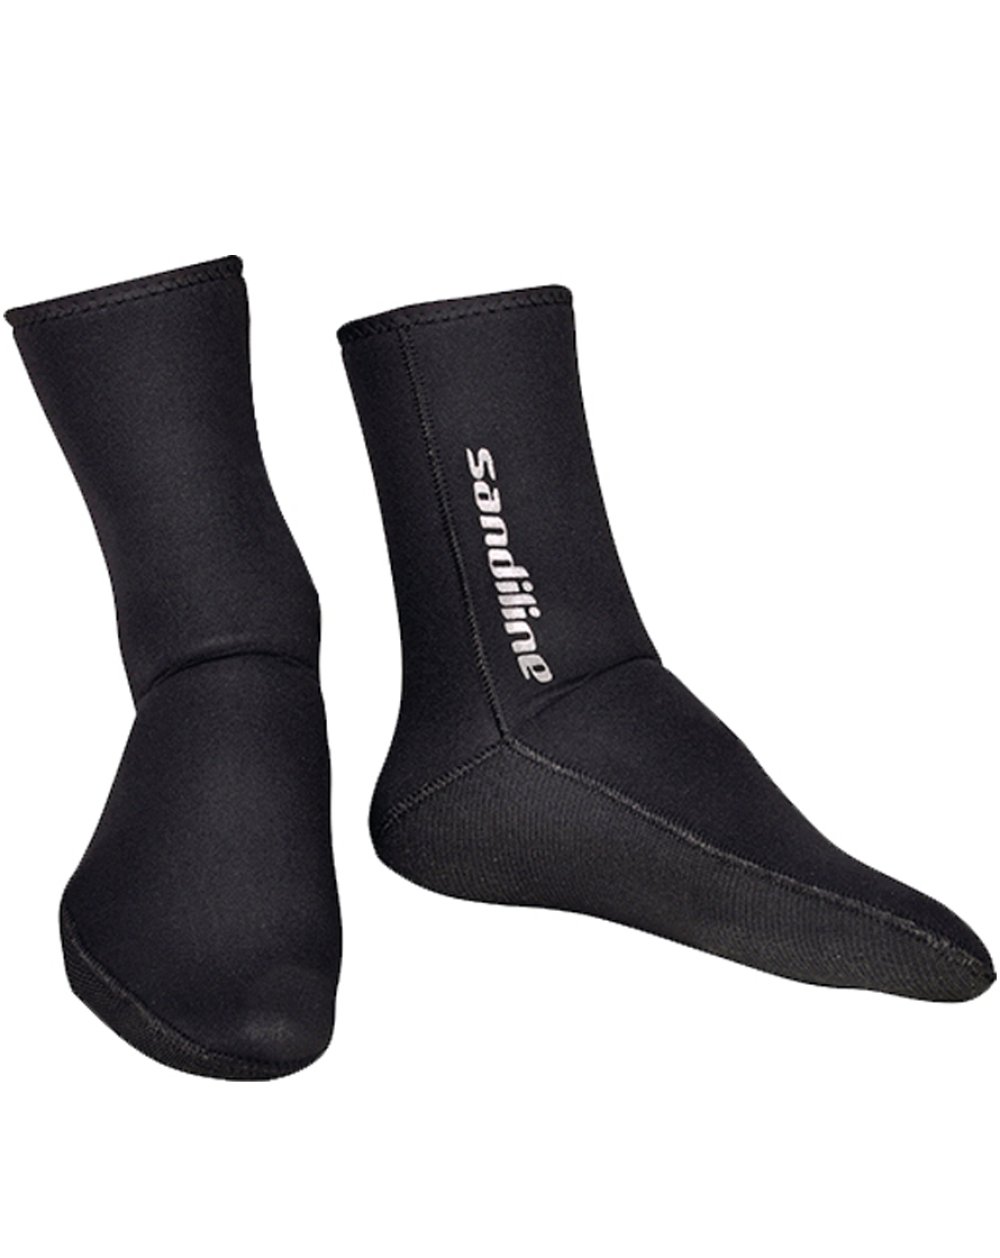 SANDILINE Socks Splash 30 - Gr. 32/33